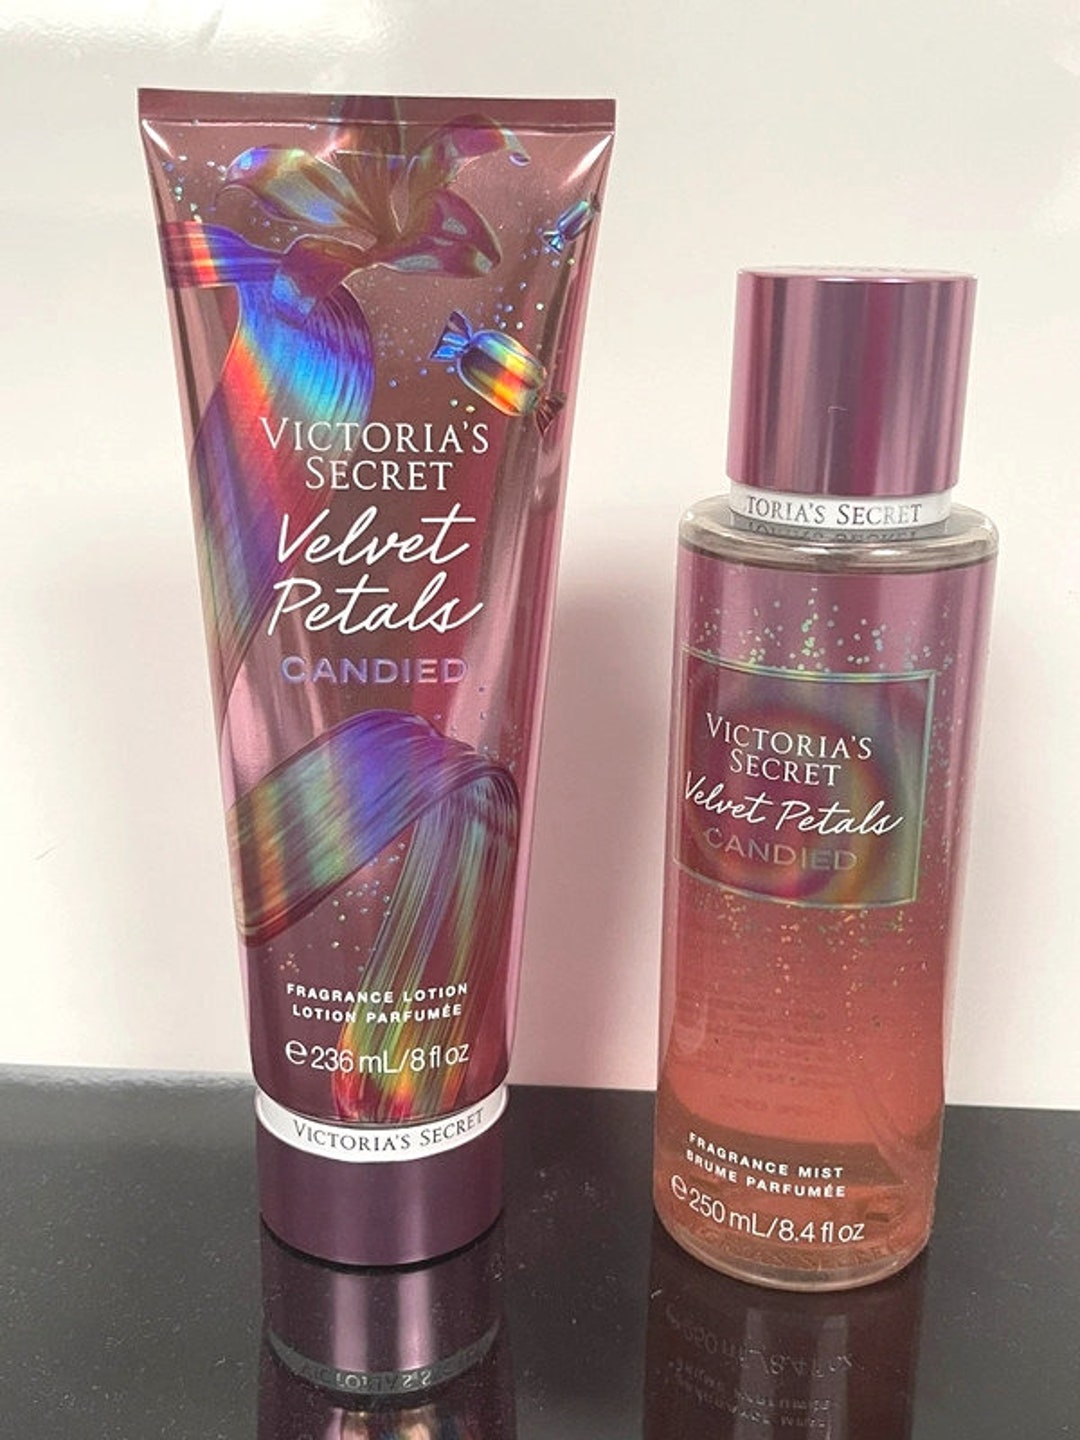 Victoria's Secret Victoria's Secret Velvet Petals Fragrance Mist India